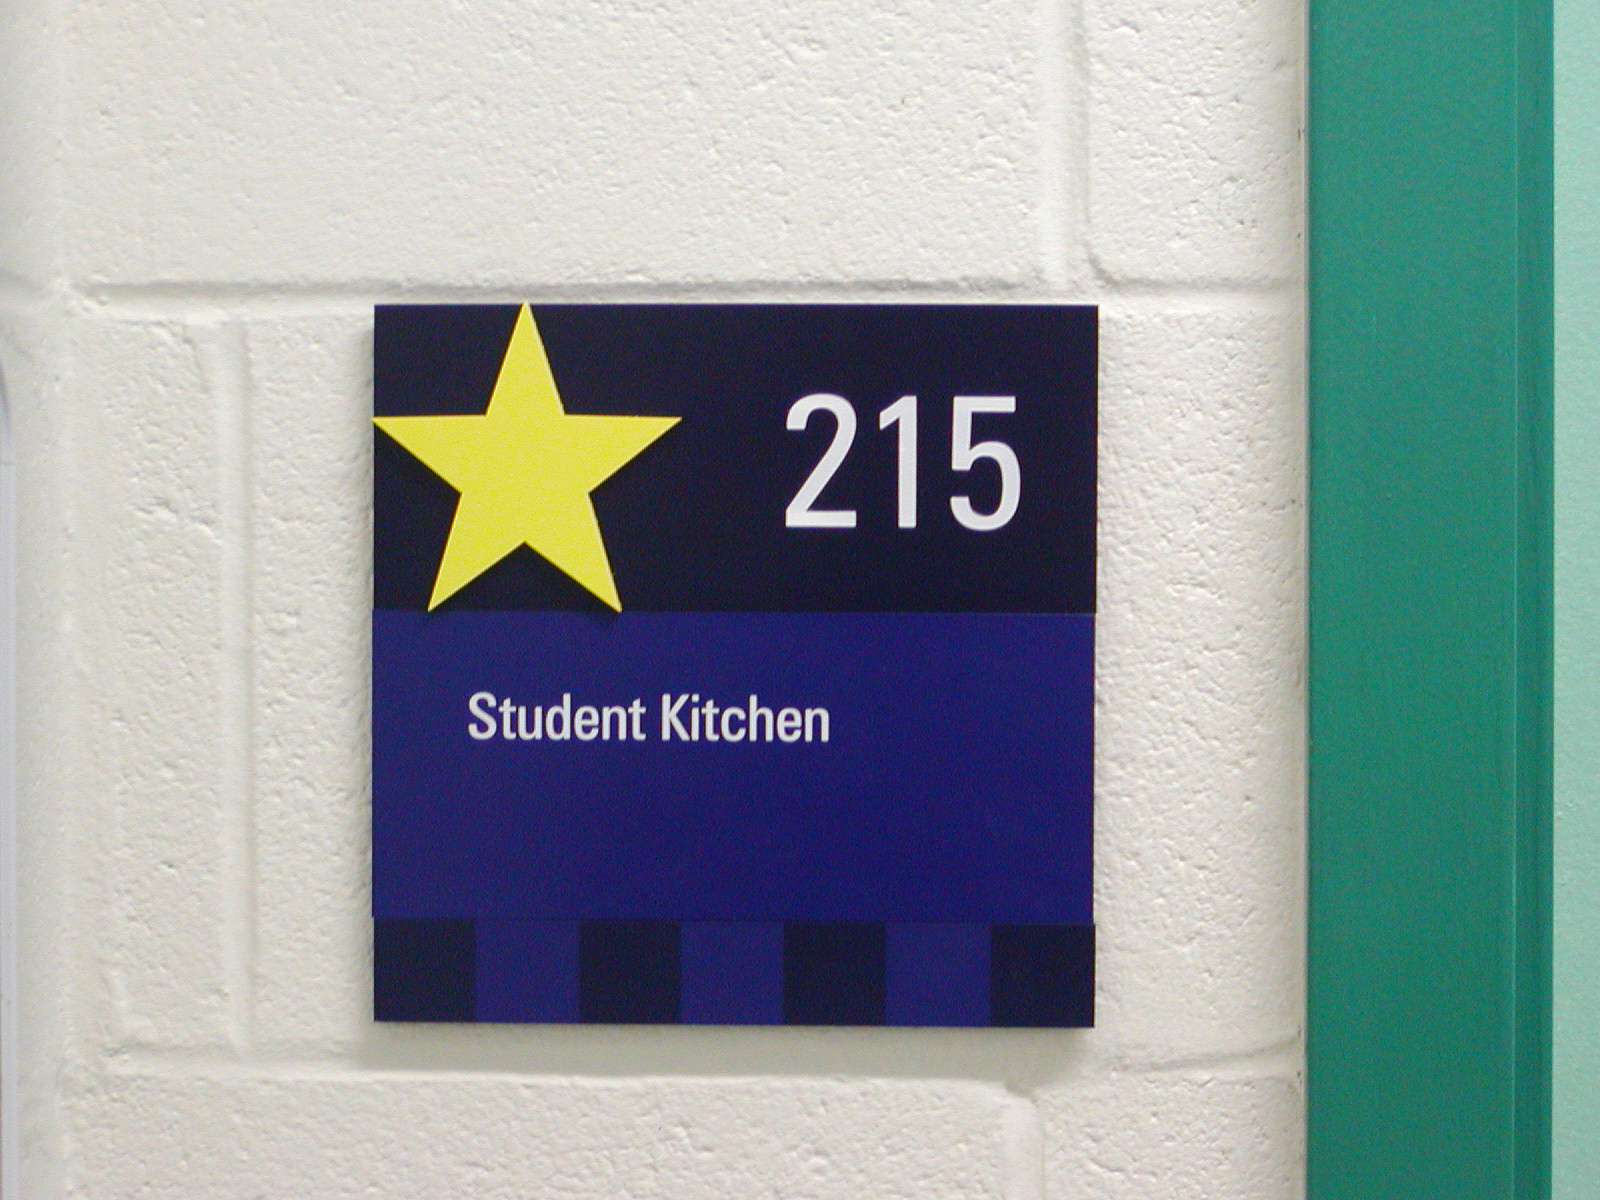 Student Kitchen.jpg